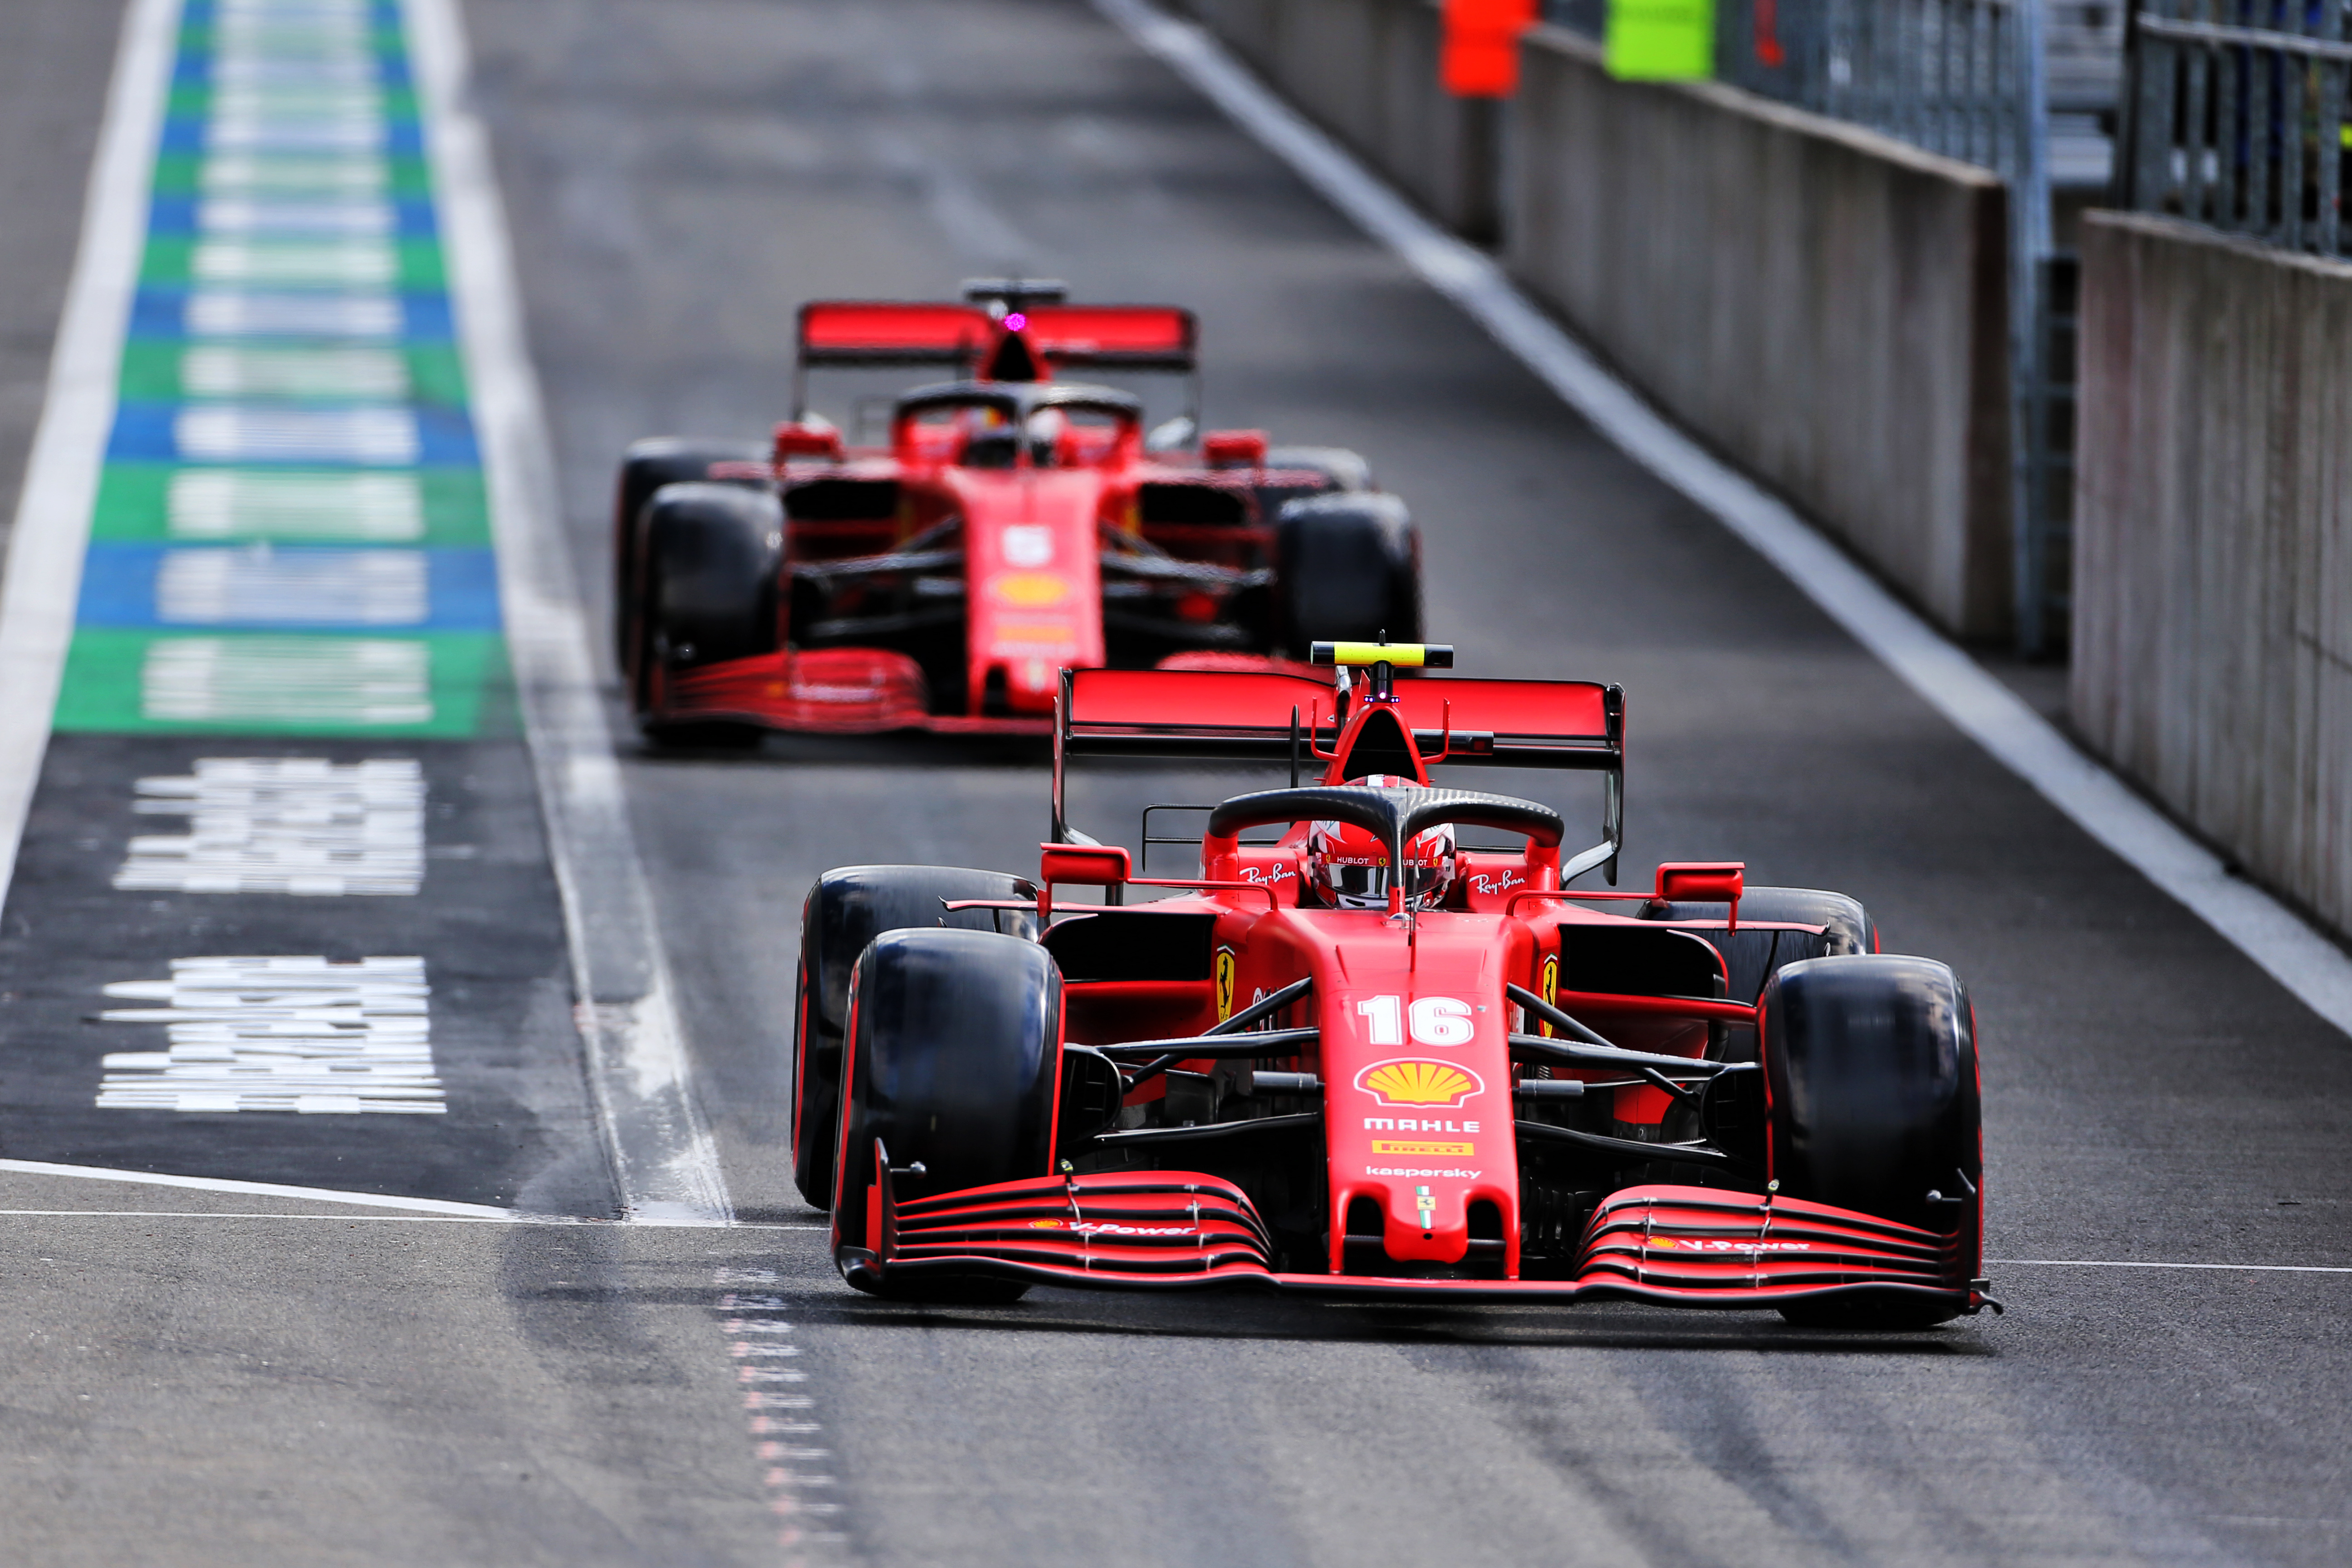 Charles Leclerc Sebastian Vettel Ferrari F1 2020 Belgian Grand Prix Spa pitlane